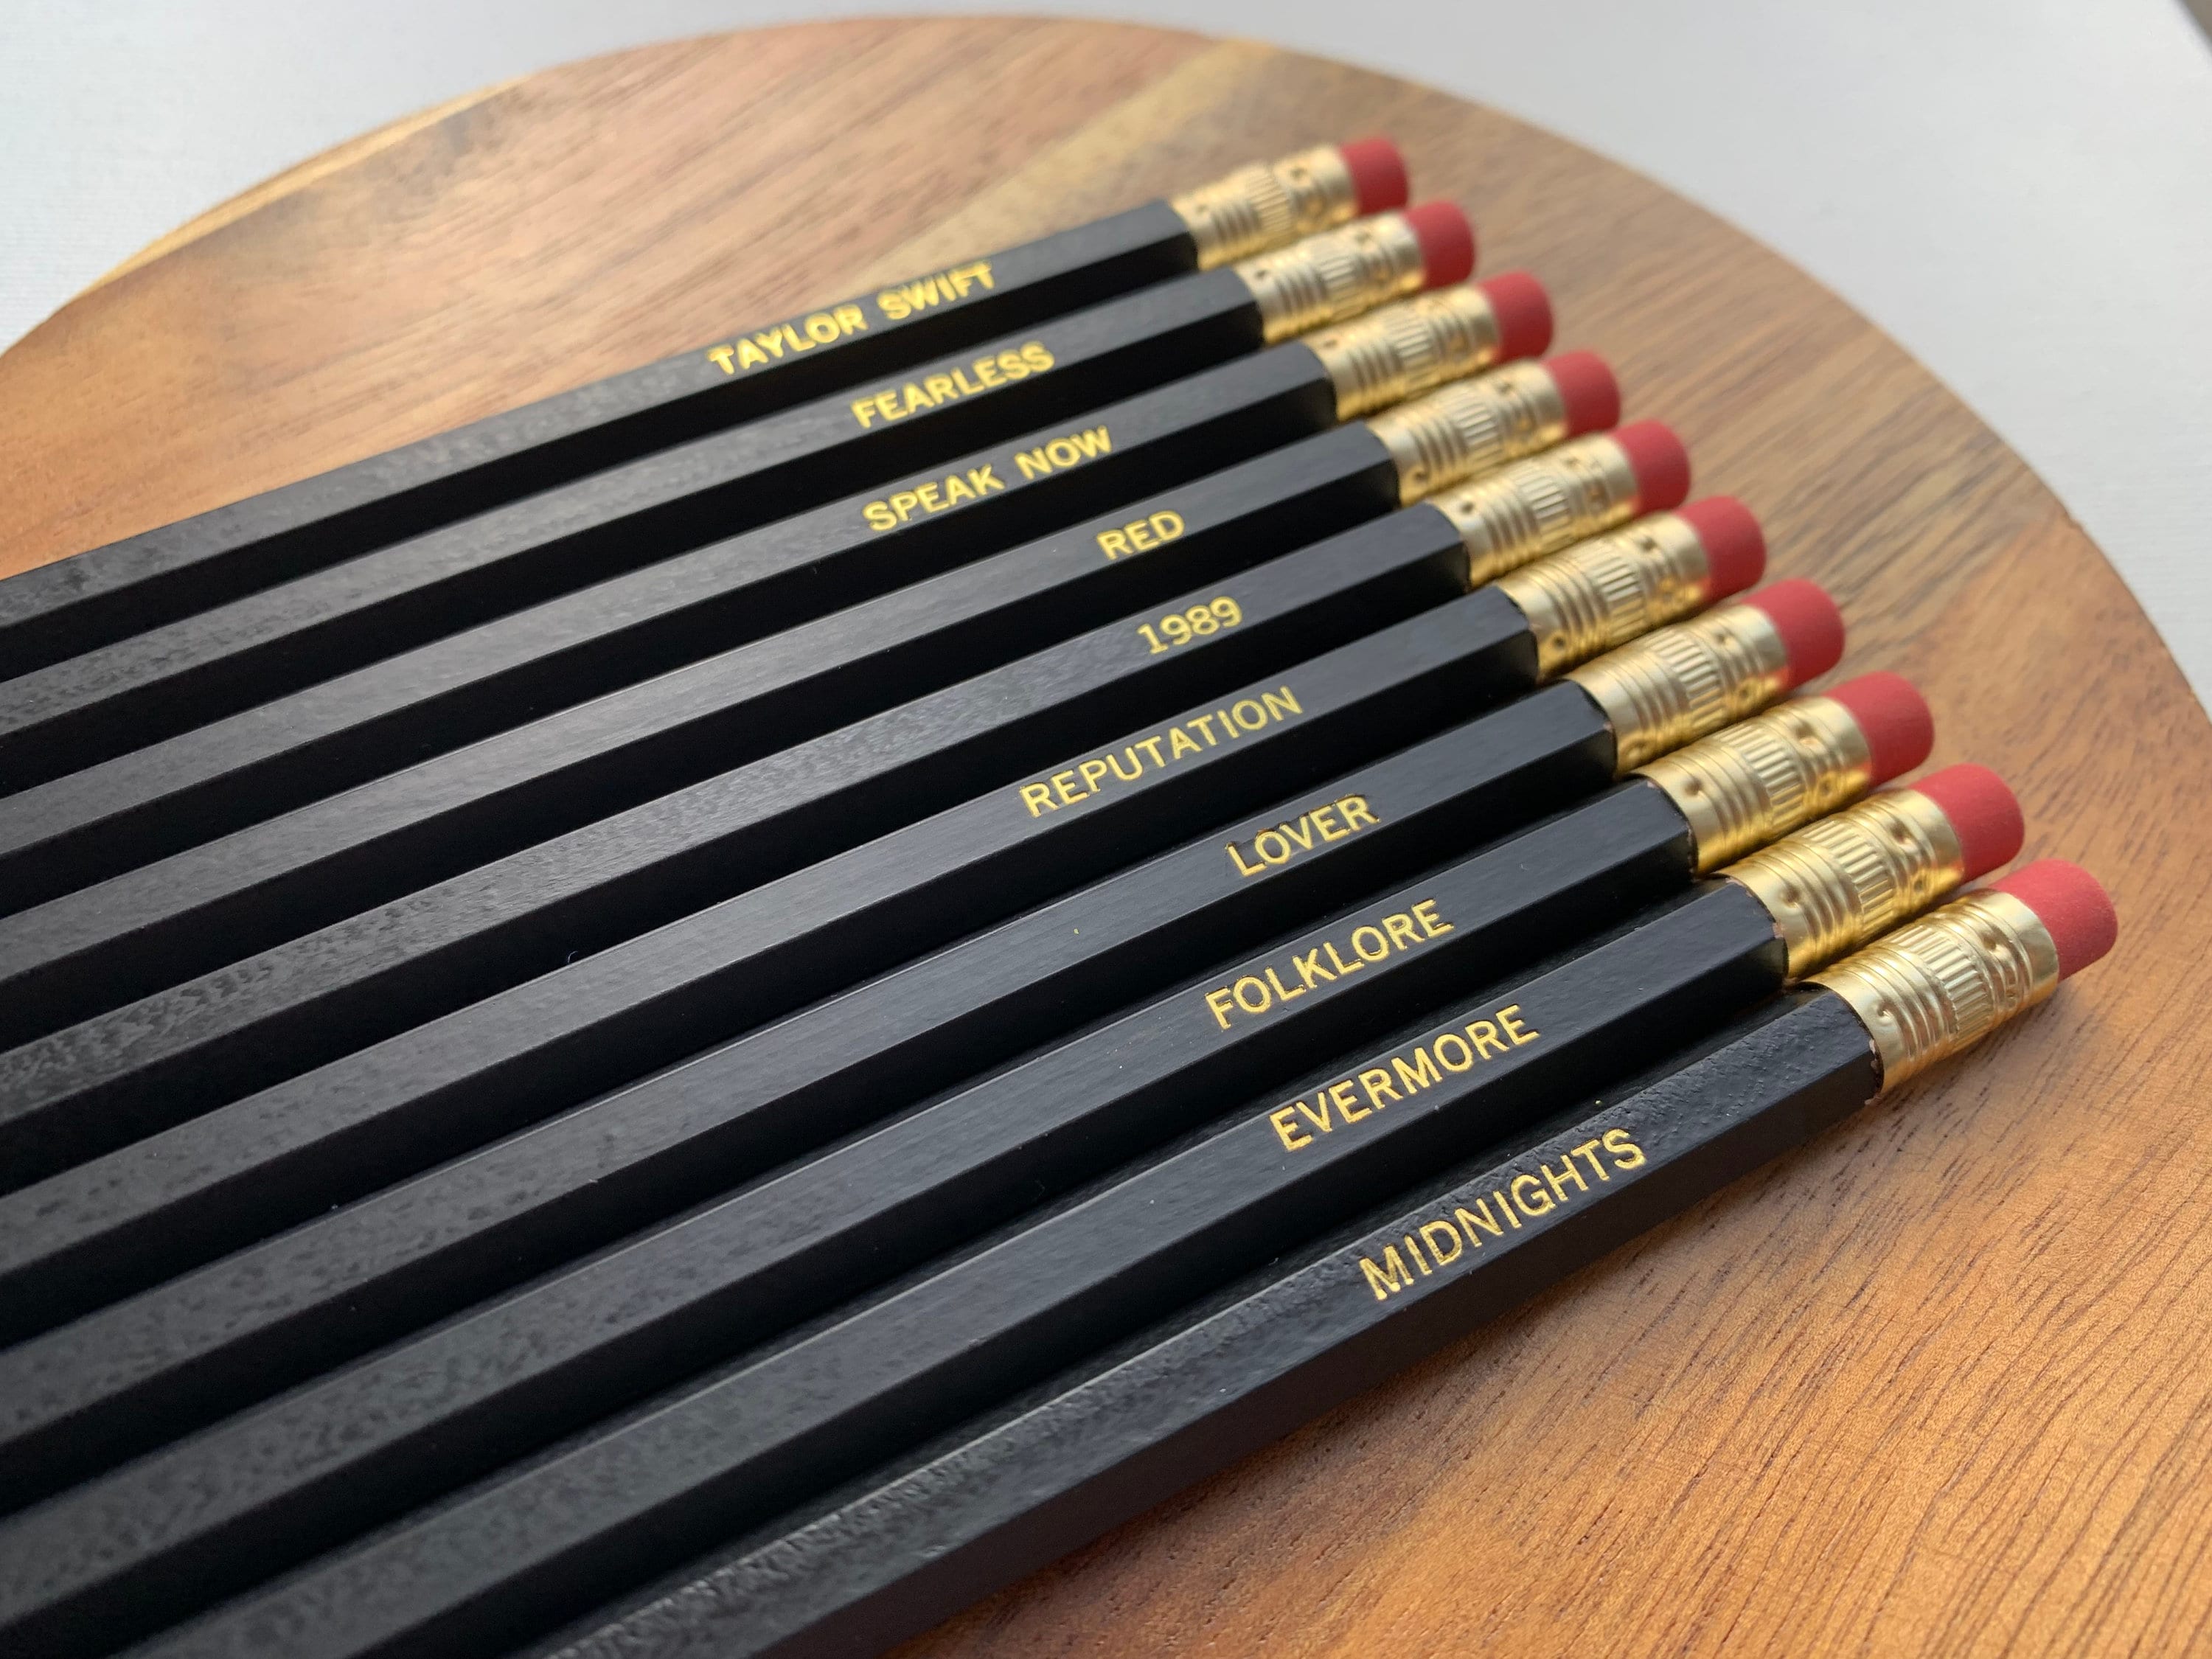 Taylor Swift Eras Tour Albums Pencil Set of 10 gift present 